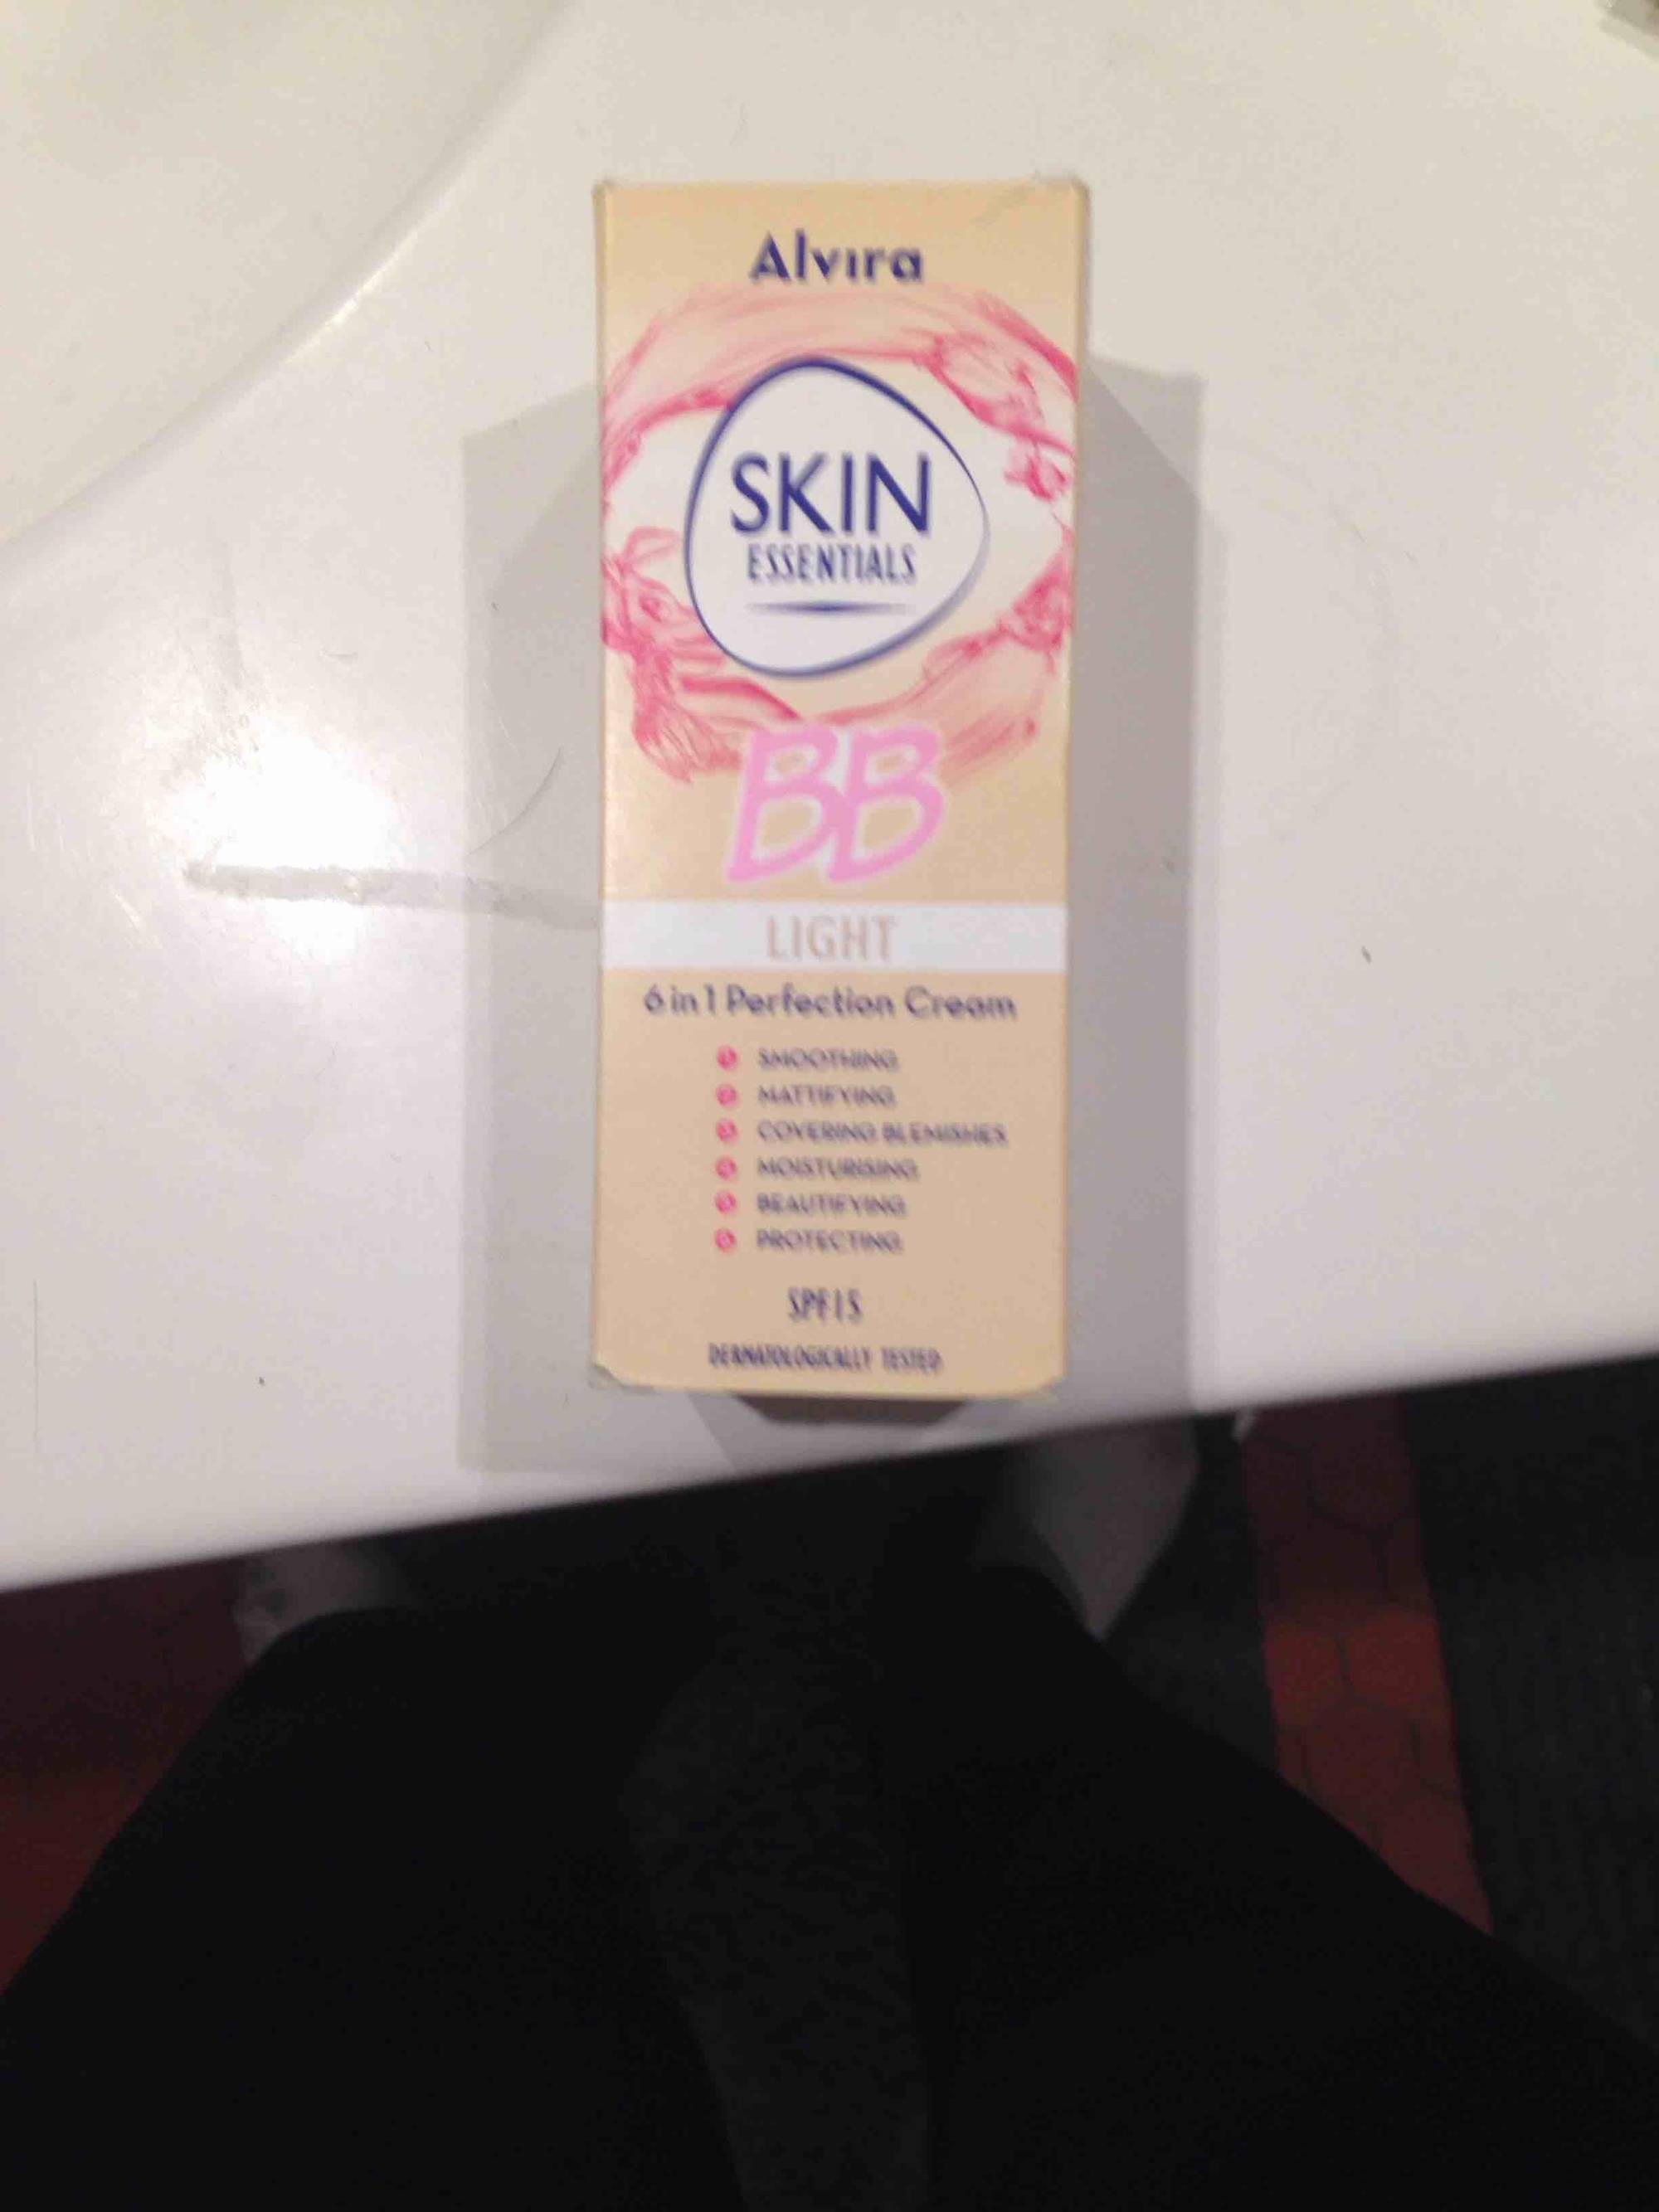 ALVIRA - Skin essentials - BB light 6 in 1 perfection cream SPF 15